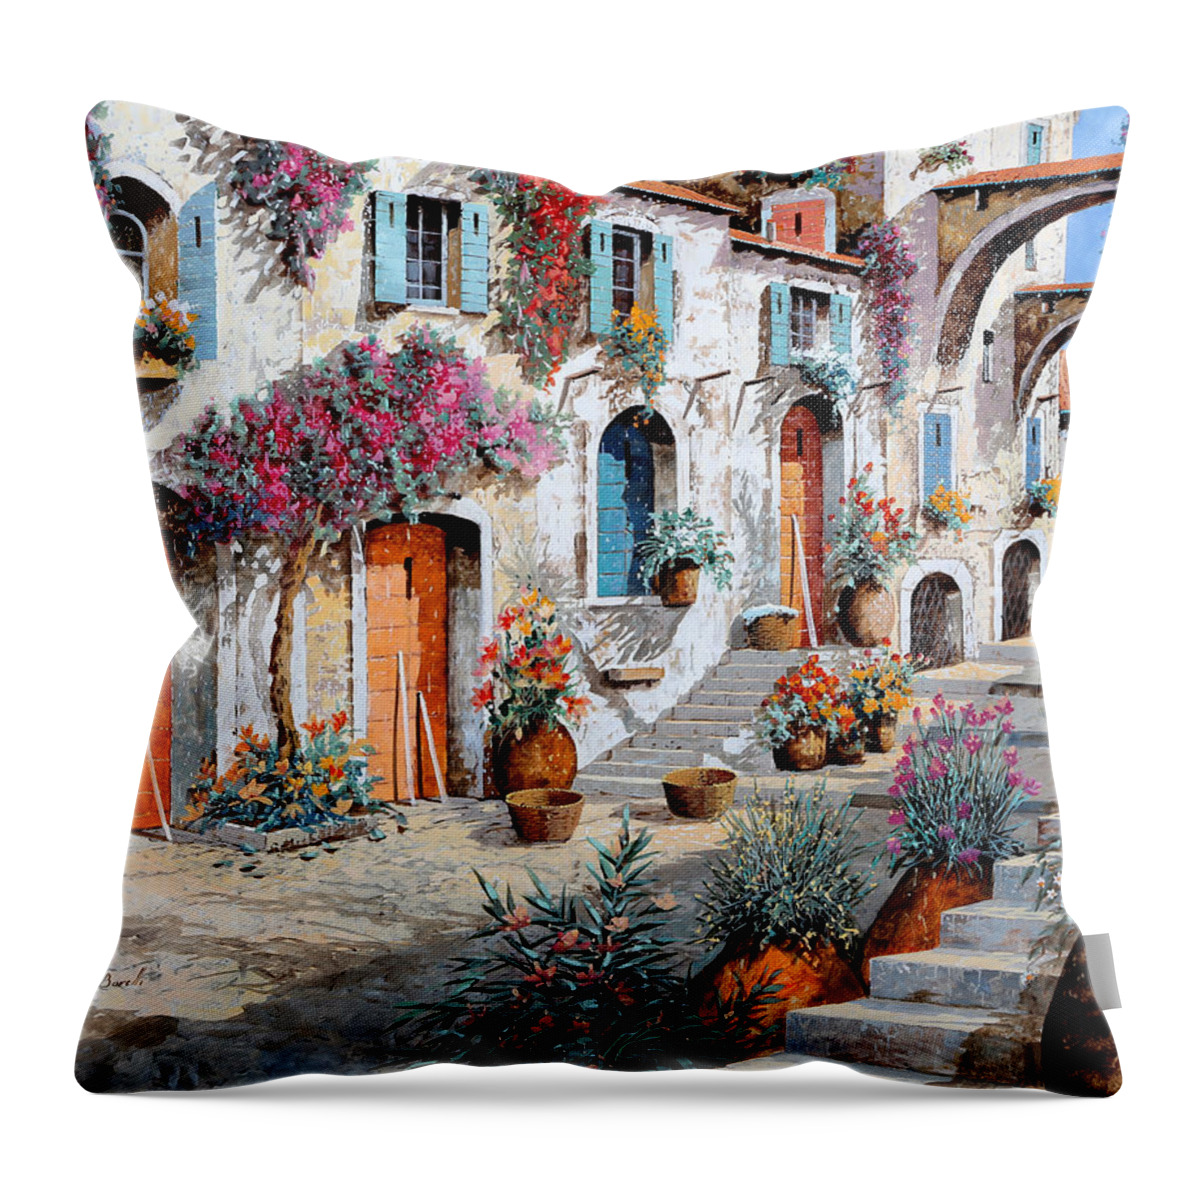 Street Scene Throw Pillow featuring the painting Tanti Fiori Per Strada by Guido Borelli